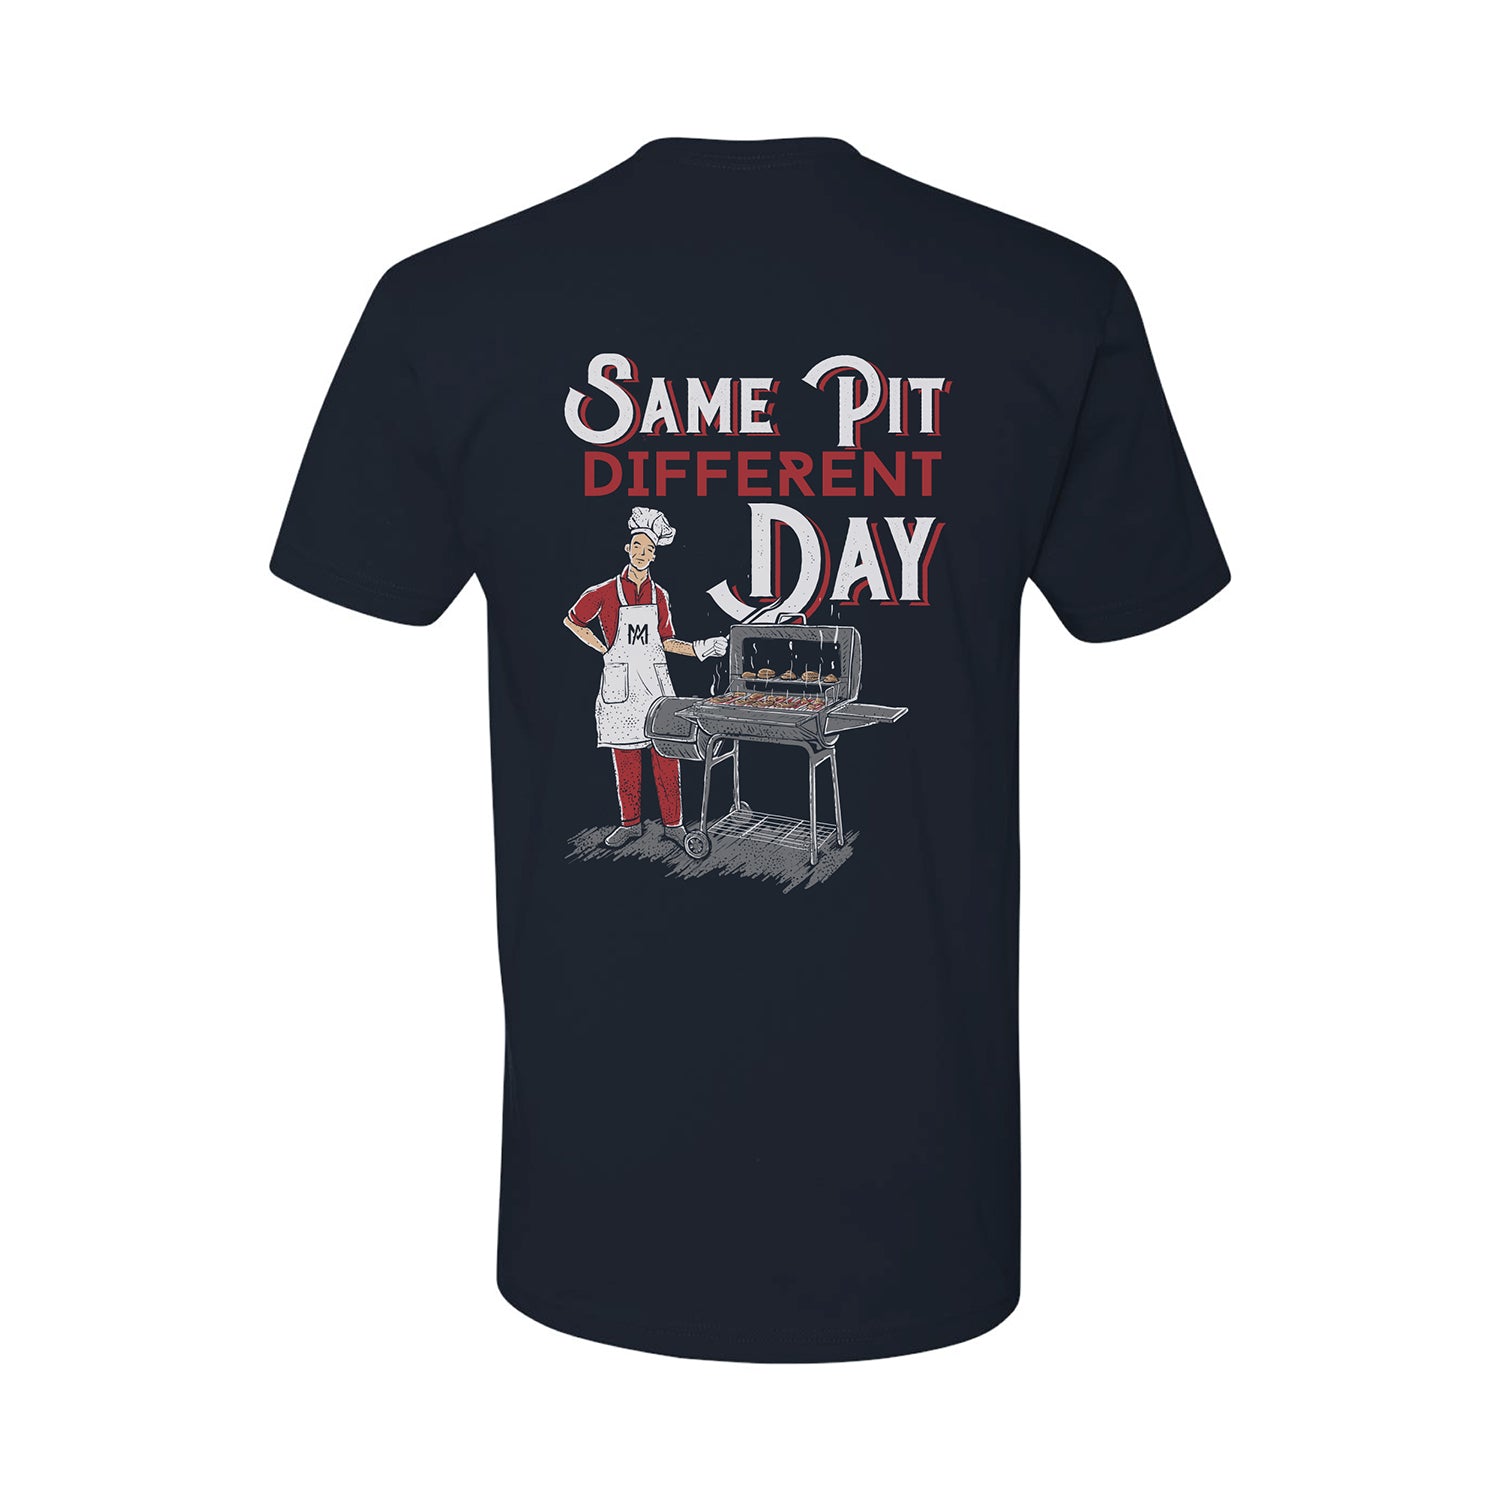 Same Pit T-Shirt